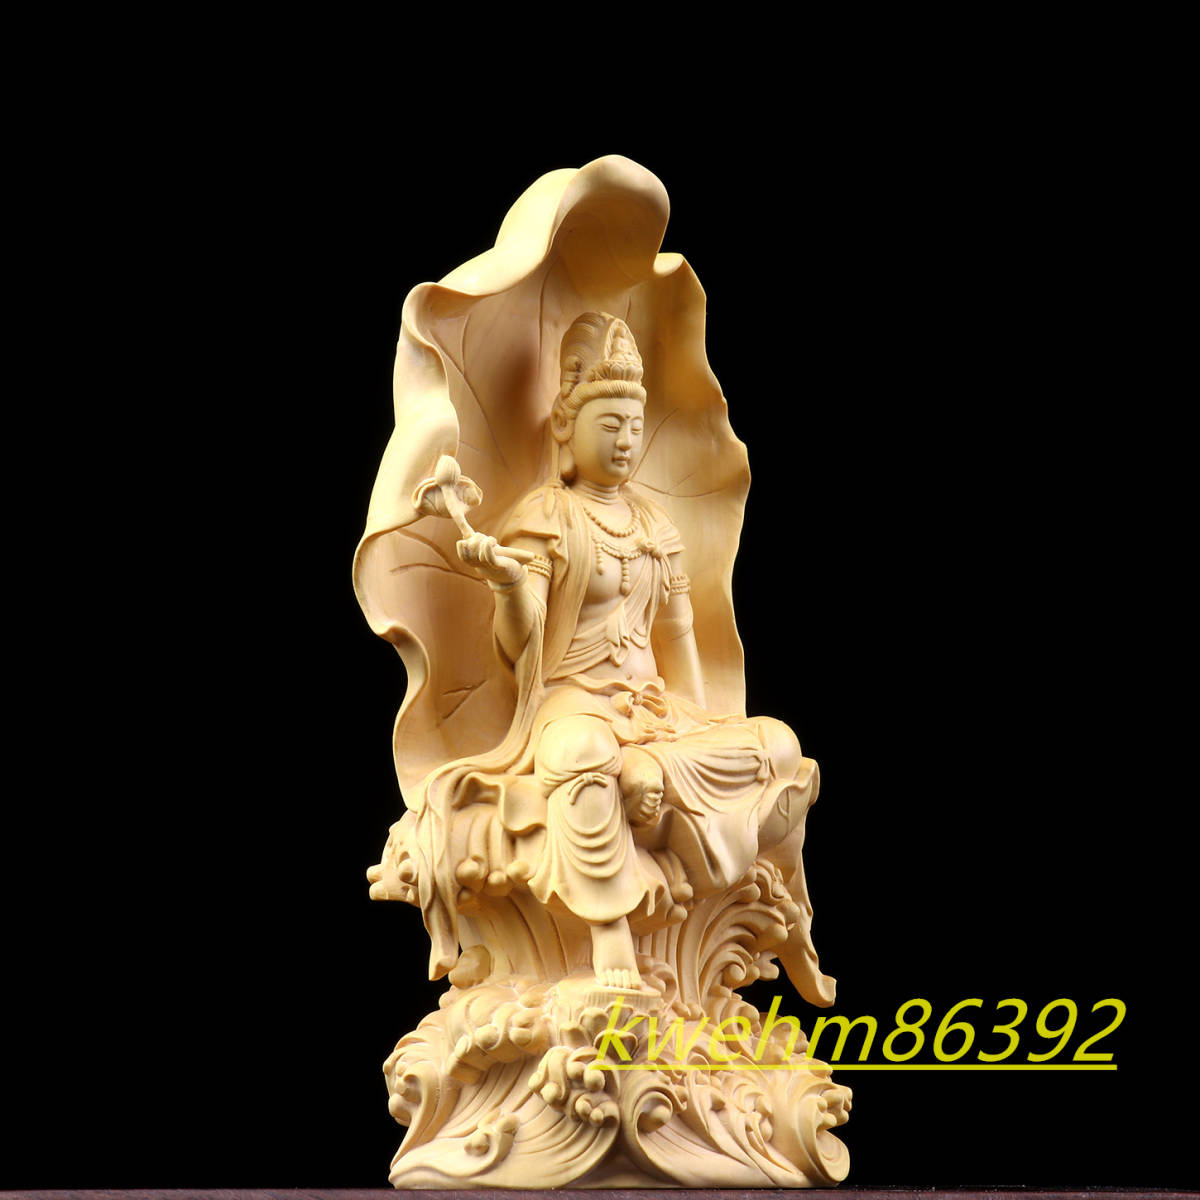 木彫り 仏像 観自在観音菩薩 自在観音菩薩 自在観音 観音菩薩 座像